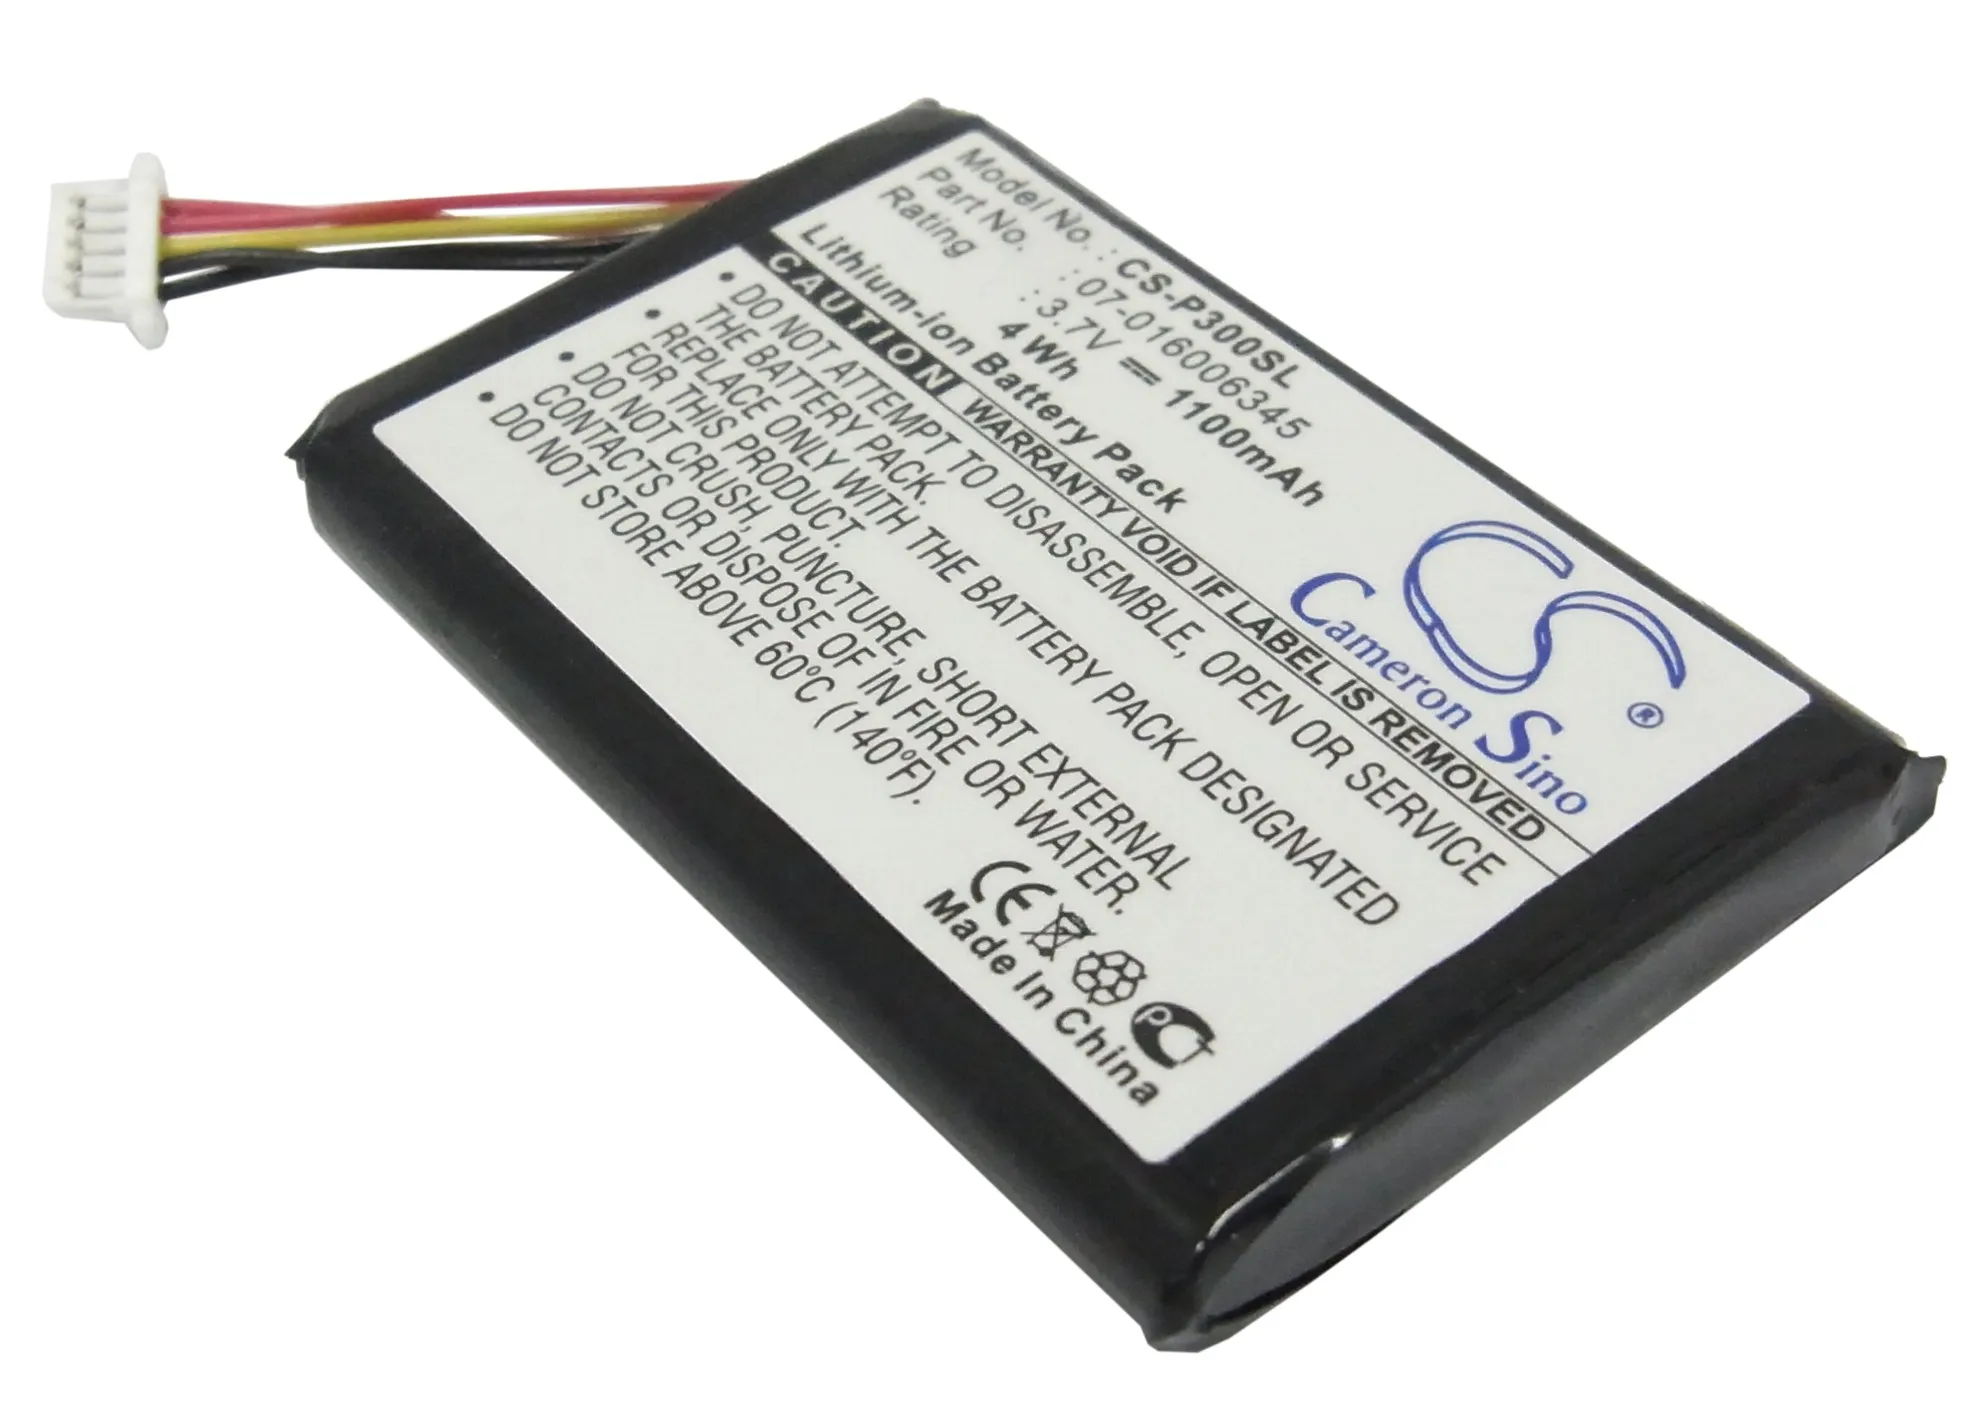 

CS 1100mAh Battery For NEC 07-016006345 Packard Bell 07-016006345 NEC MobilePro P300 Packard Bell PocketGear 2030